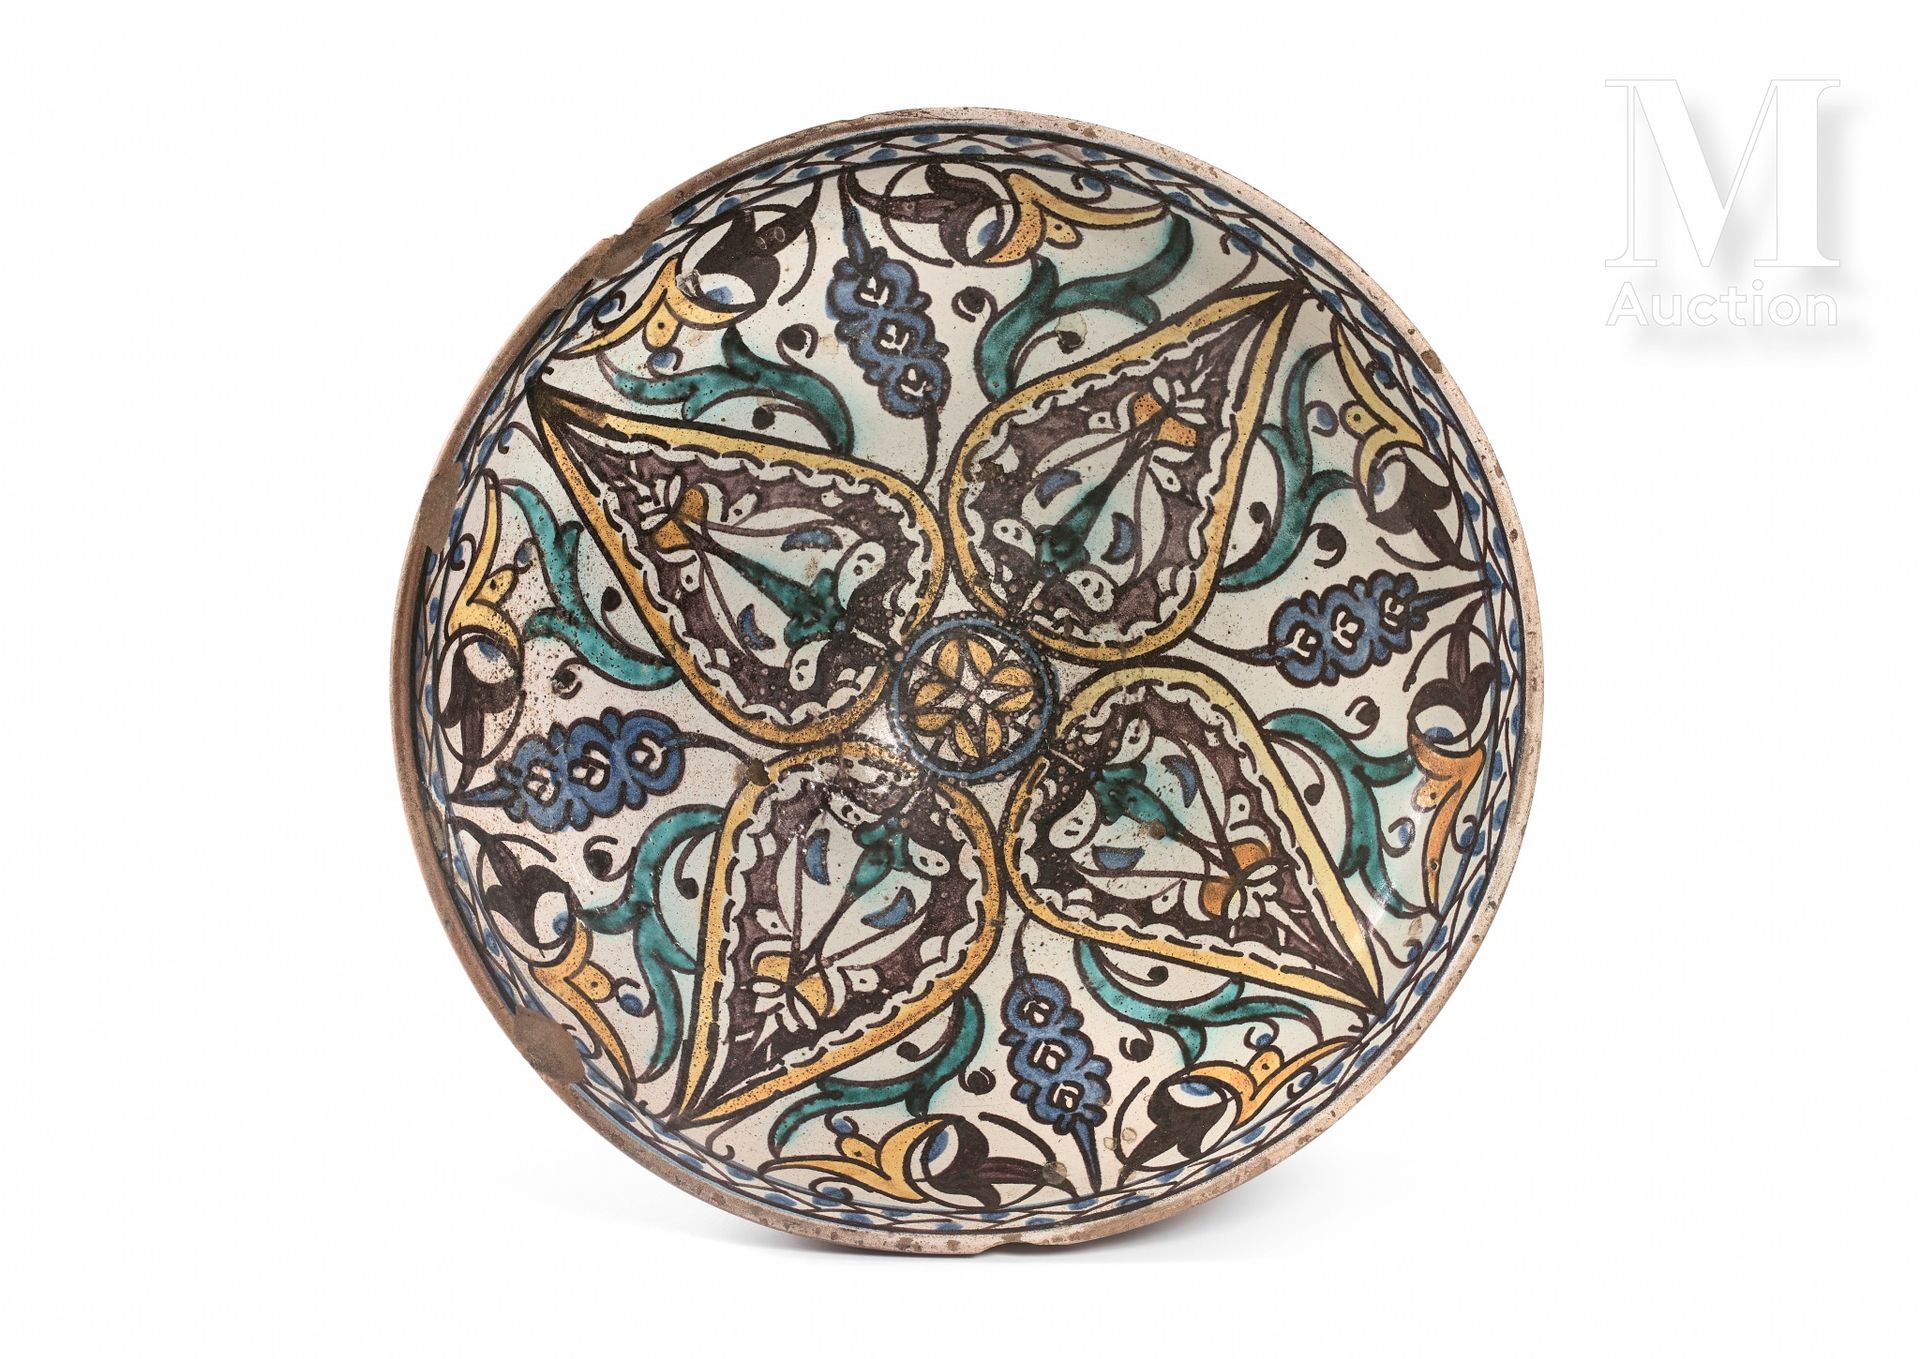 Mokhfia aux quatre feuilles Marokko, Fes, um 1800

Keramik mit bemaltem Dekor au&hellip;